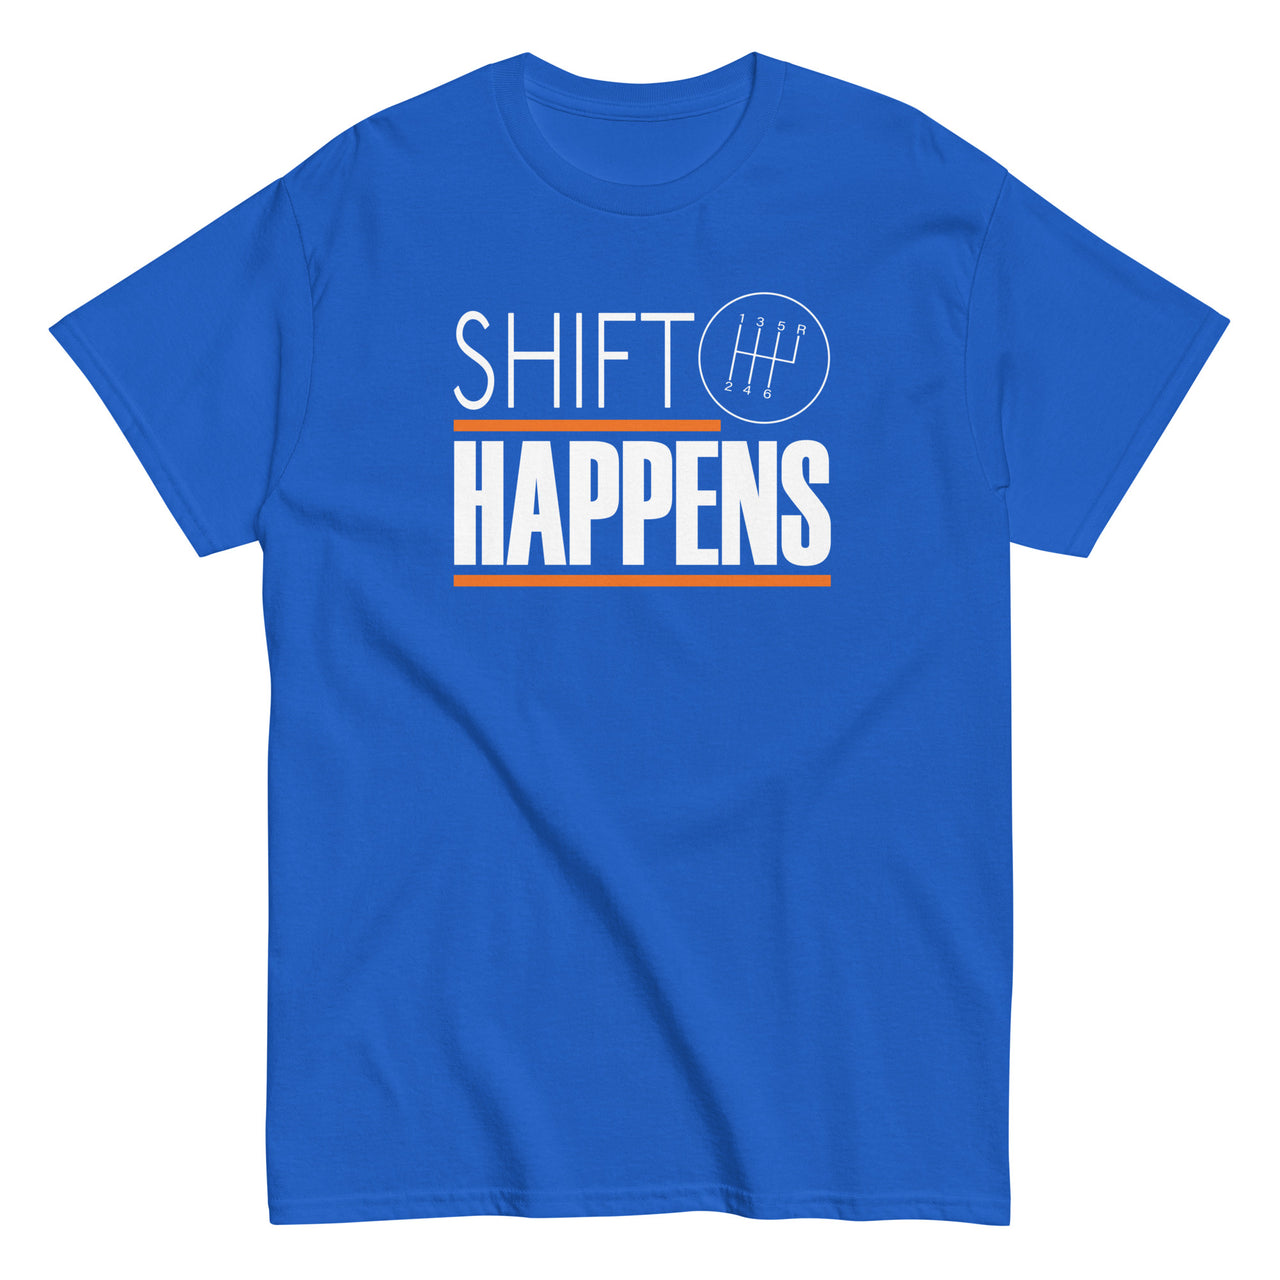 Car Enthusiast T-Shirt, Shift Happens Shirt, Manual Transmission Tee in blue